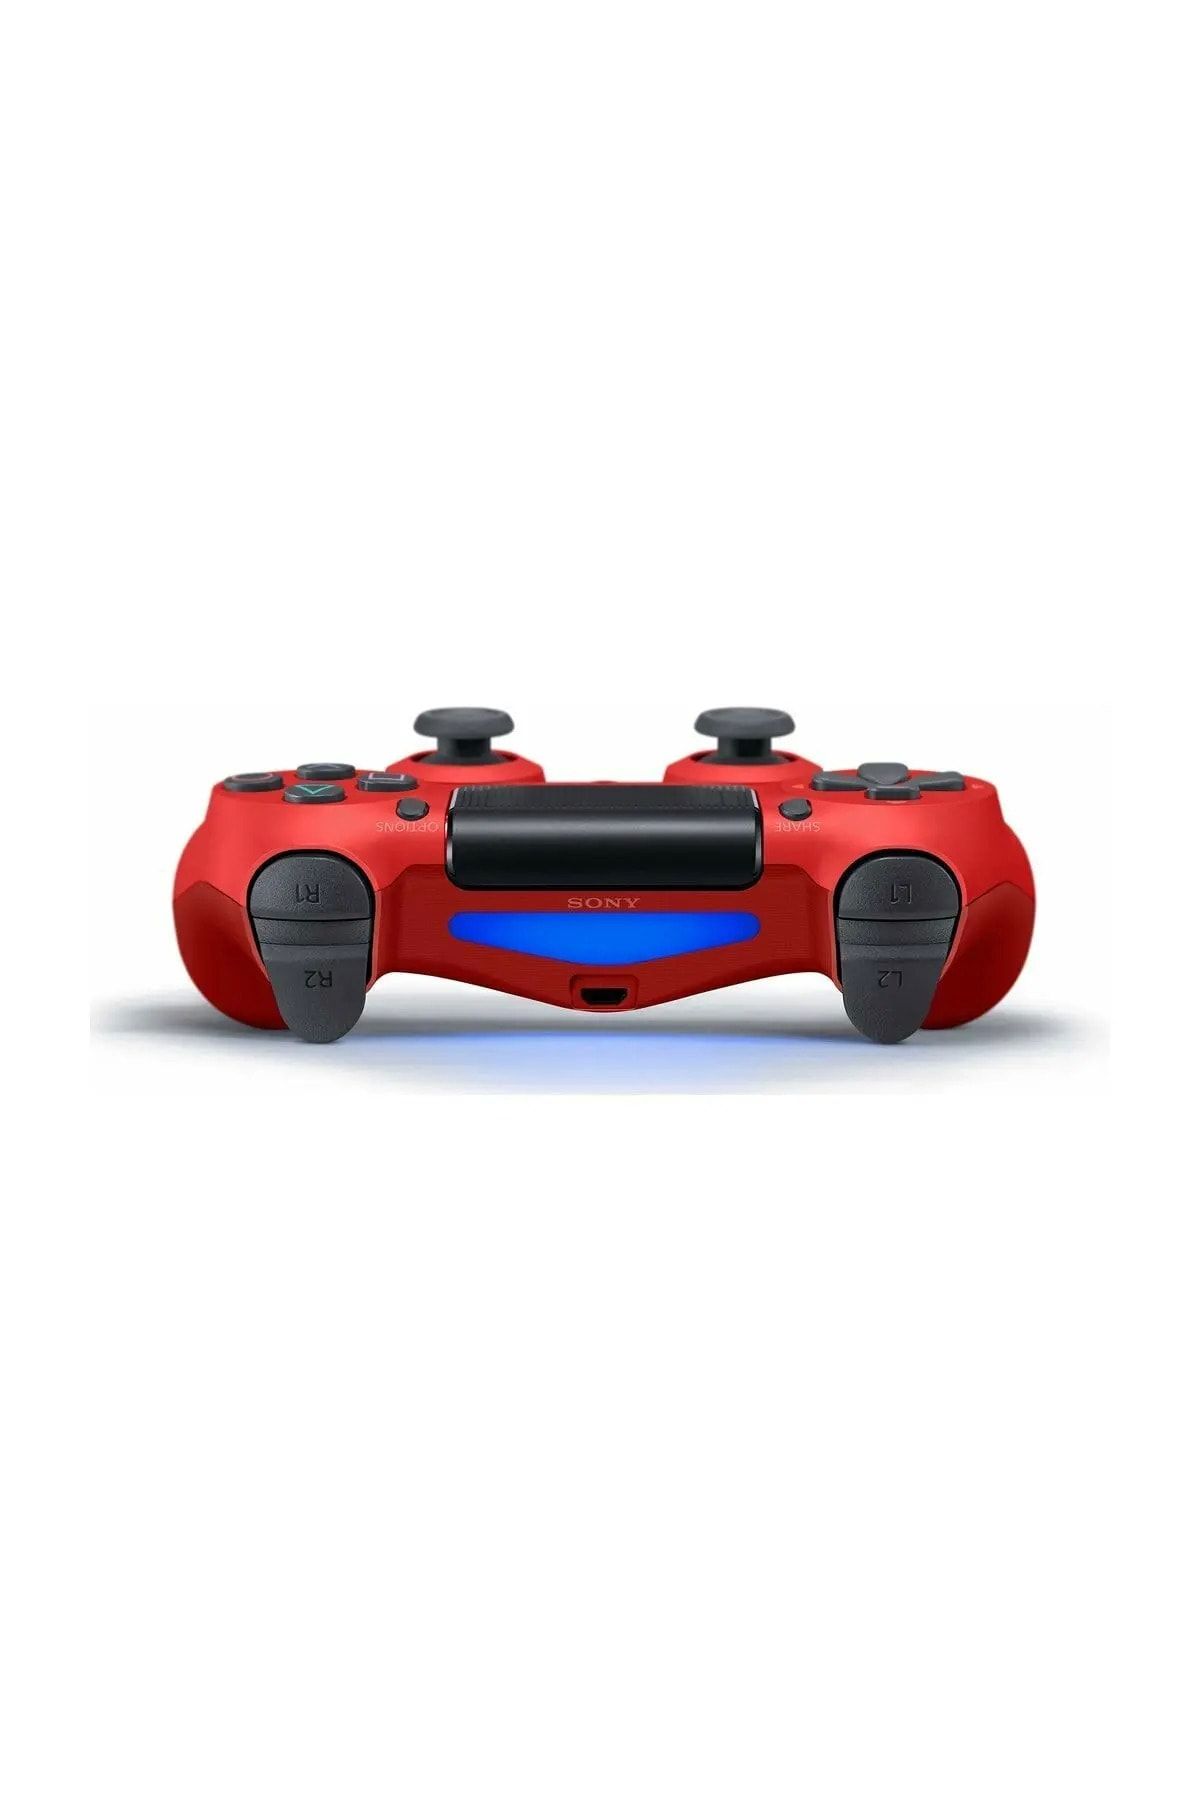 Sony PS4 Dualshock Kablosuz Kumanda Magma Red - Mağma Kırmızısı V2 (İthalatçı Garantili)